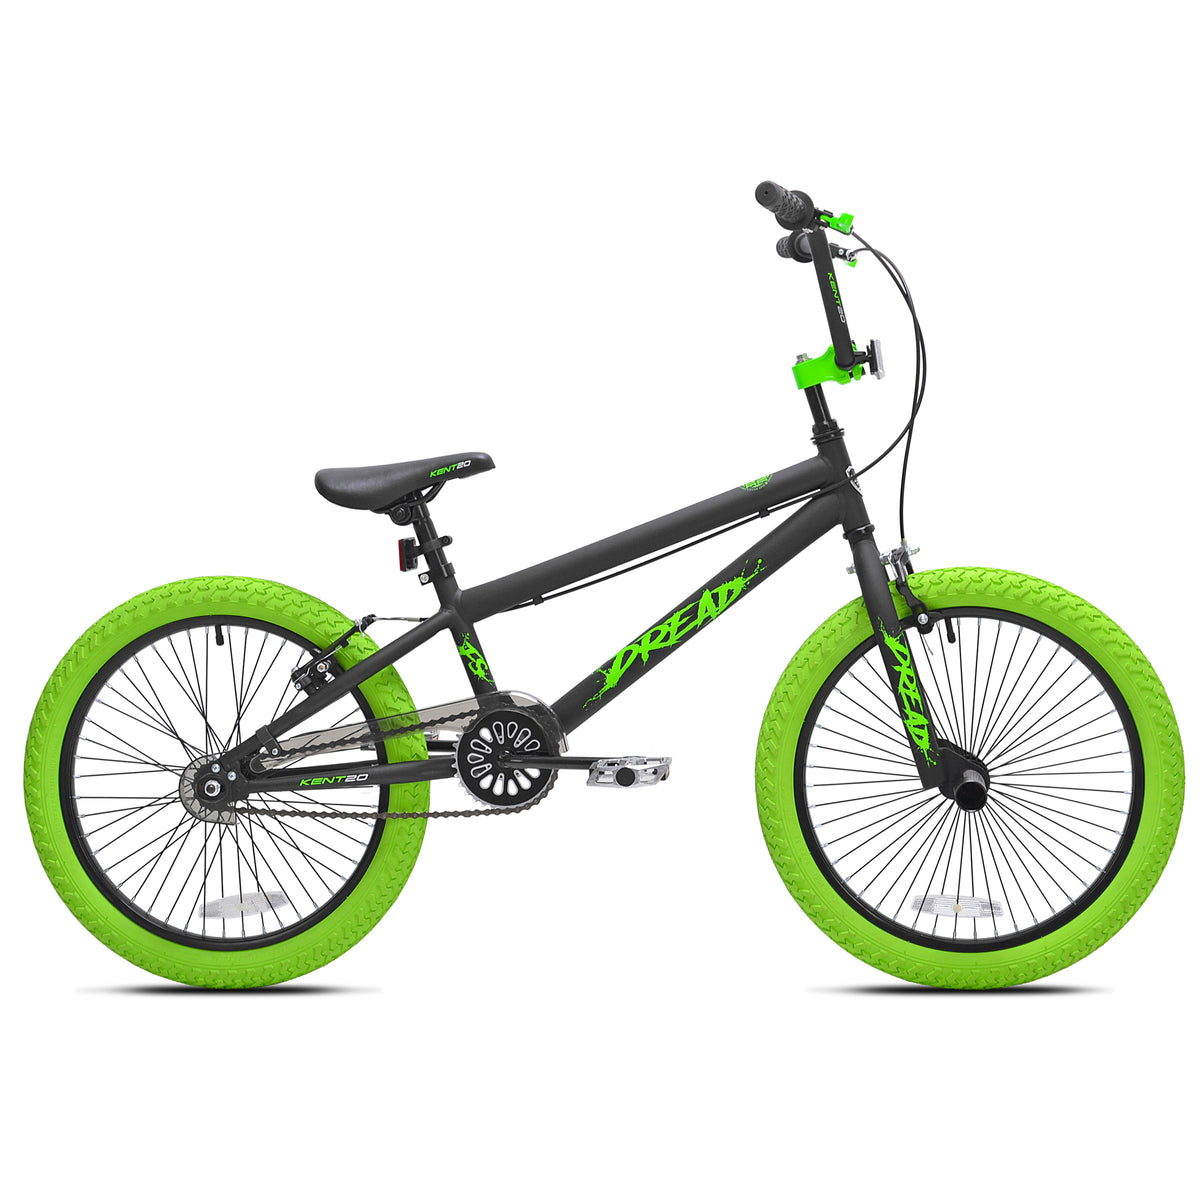 20" Kent Dread | Bike for Kids Ages 7-13